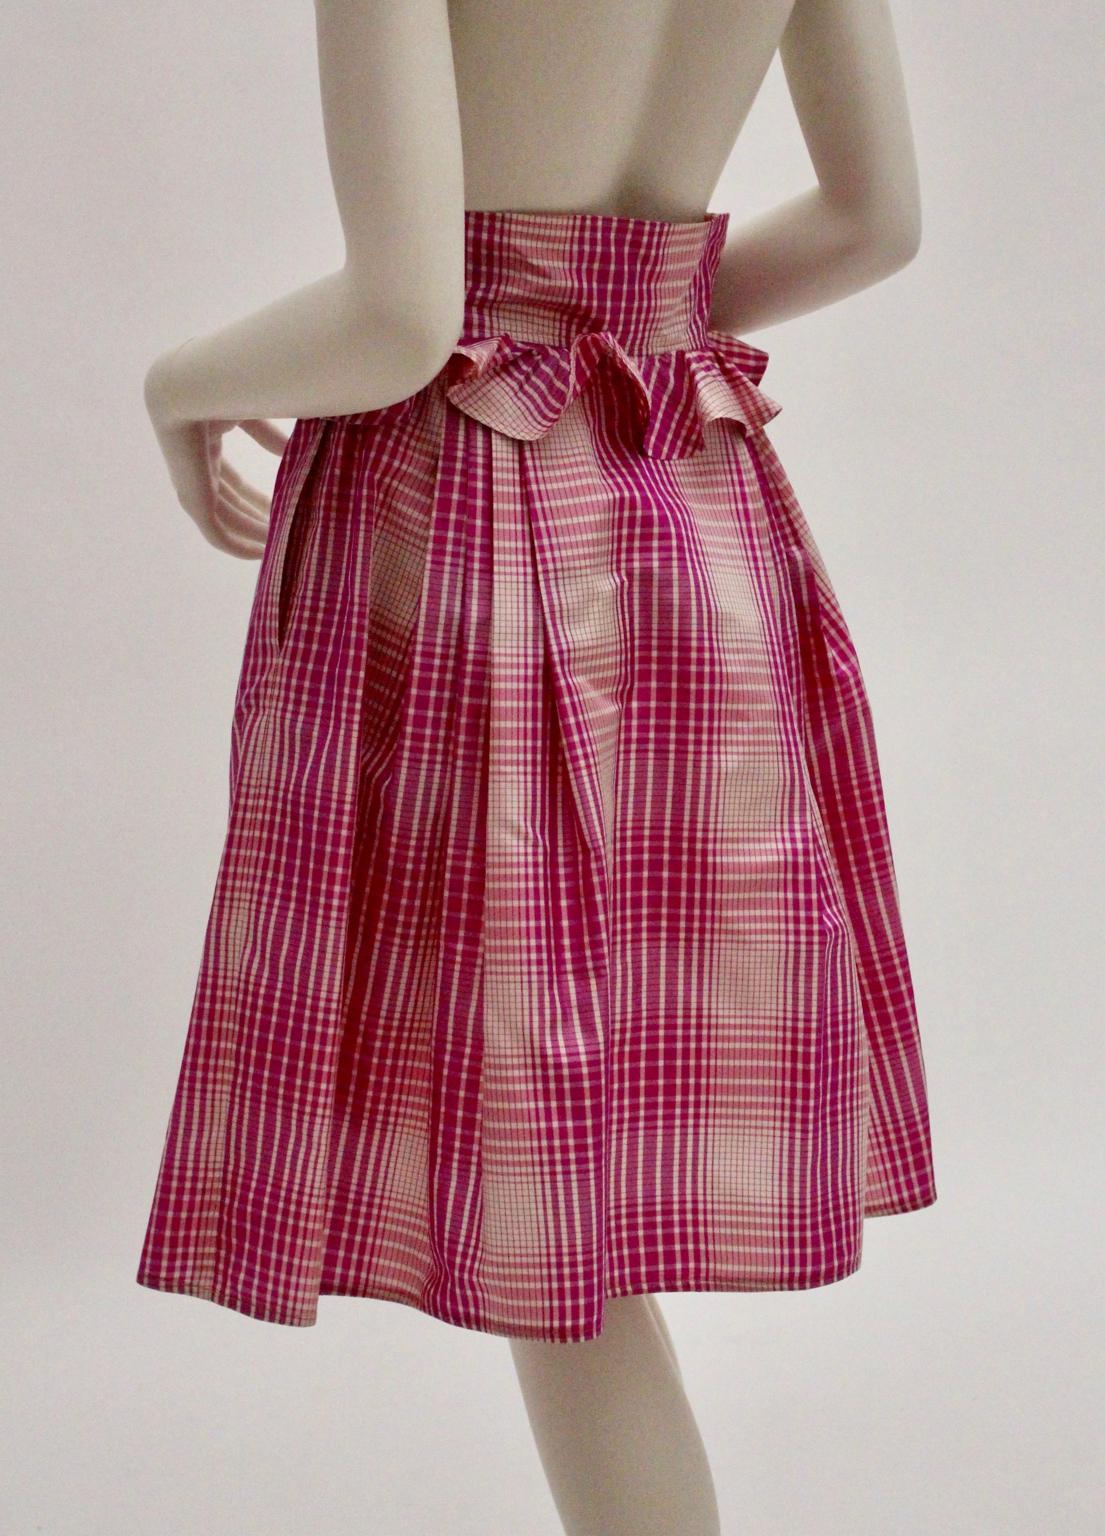 Silk Pink White Checker Vintage High Waist Skirt by Emanuel Ungaro 1980s Paris For Sale 2